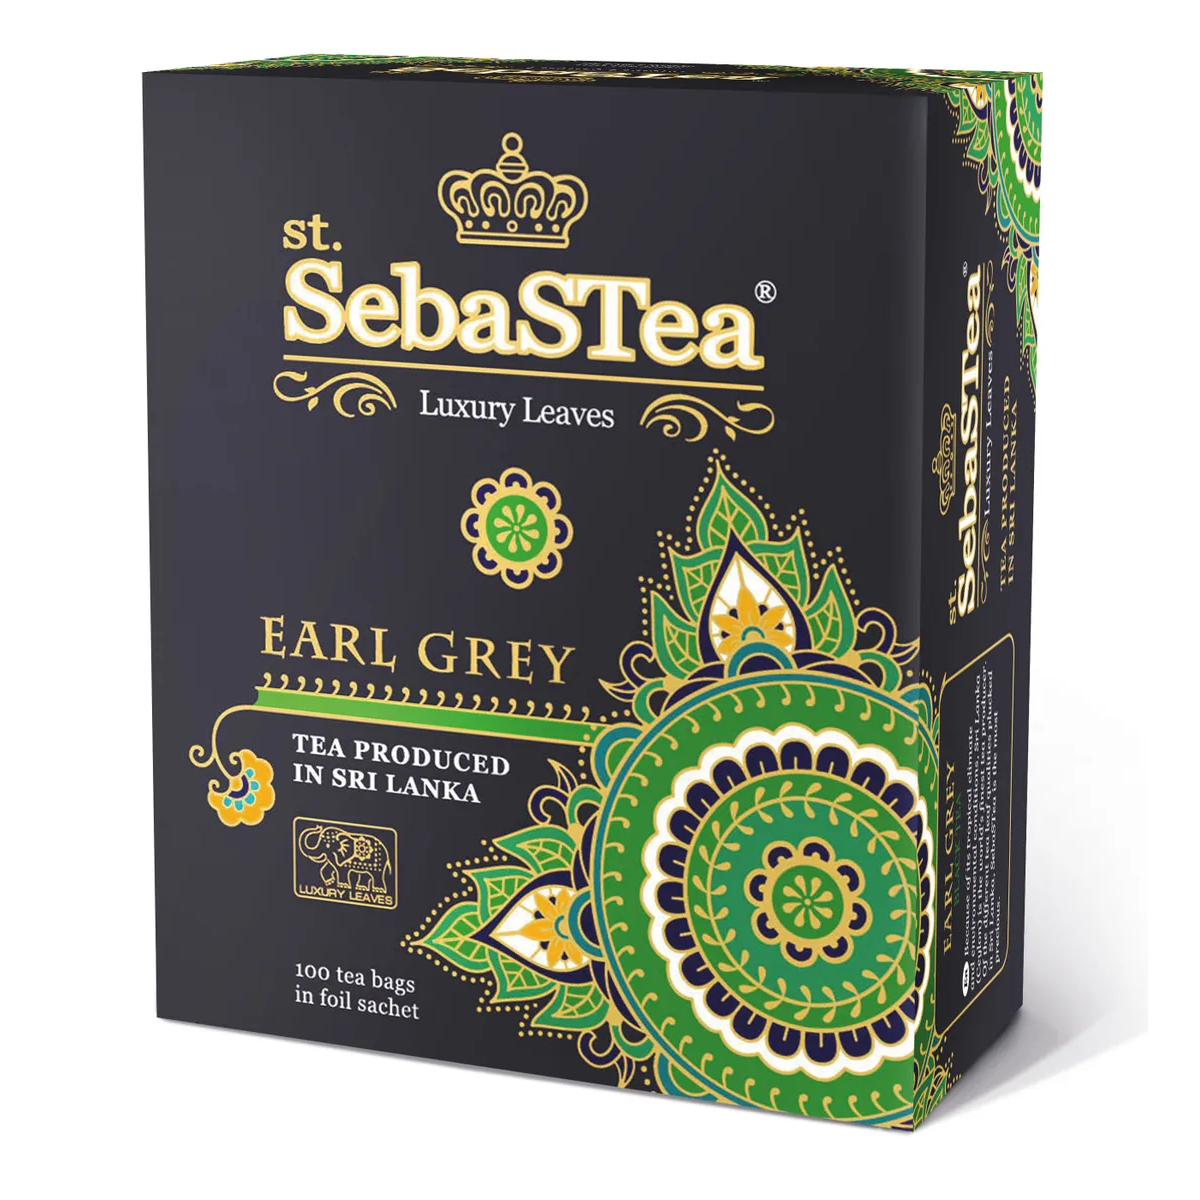 Чай чёрный SebaSTea Earl Grey пакетированный, 100х1.5 г чай черный ароматизированный newby earl grey 50 г 25 шт пакетированный